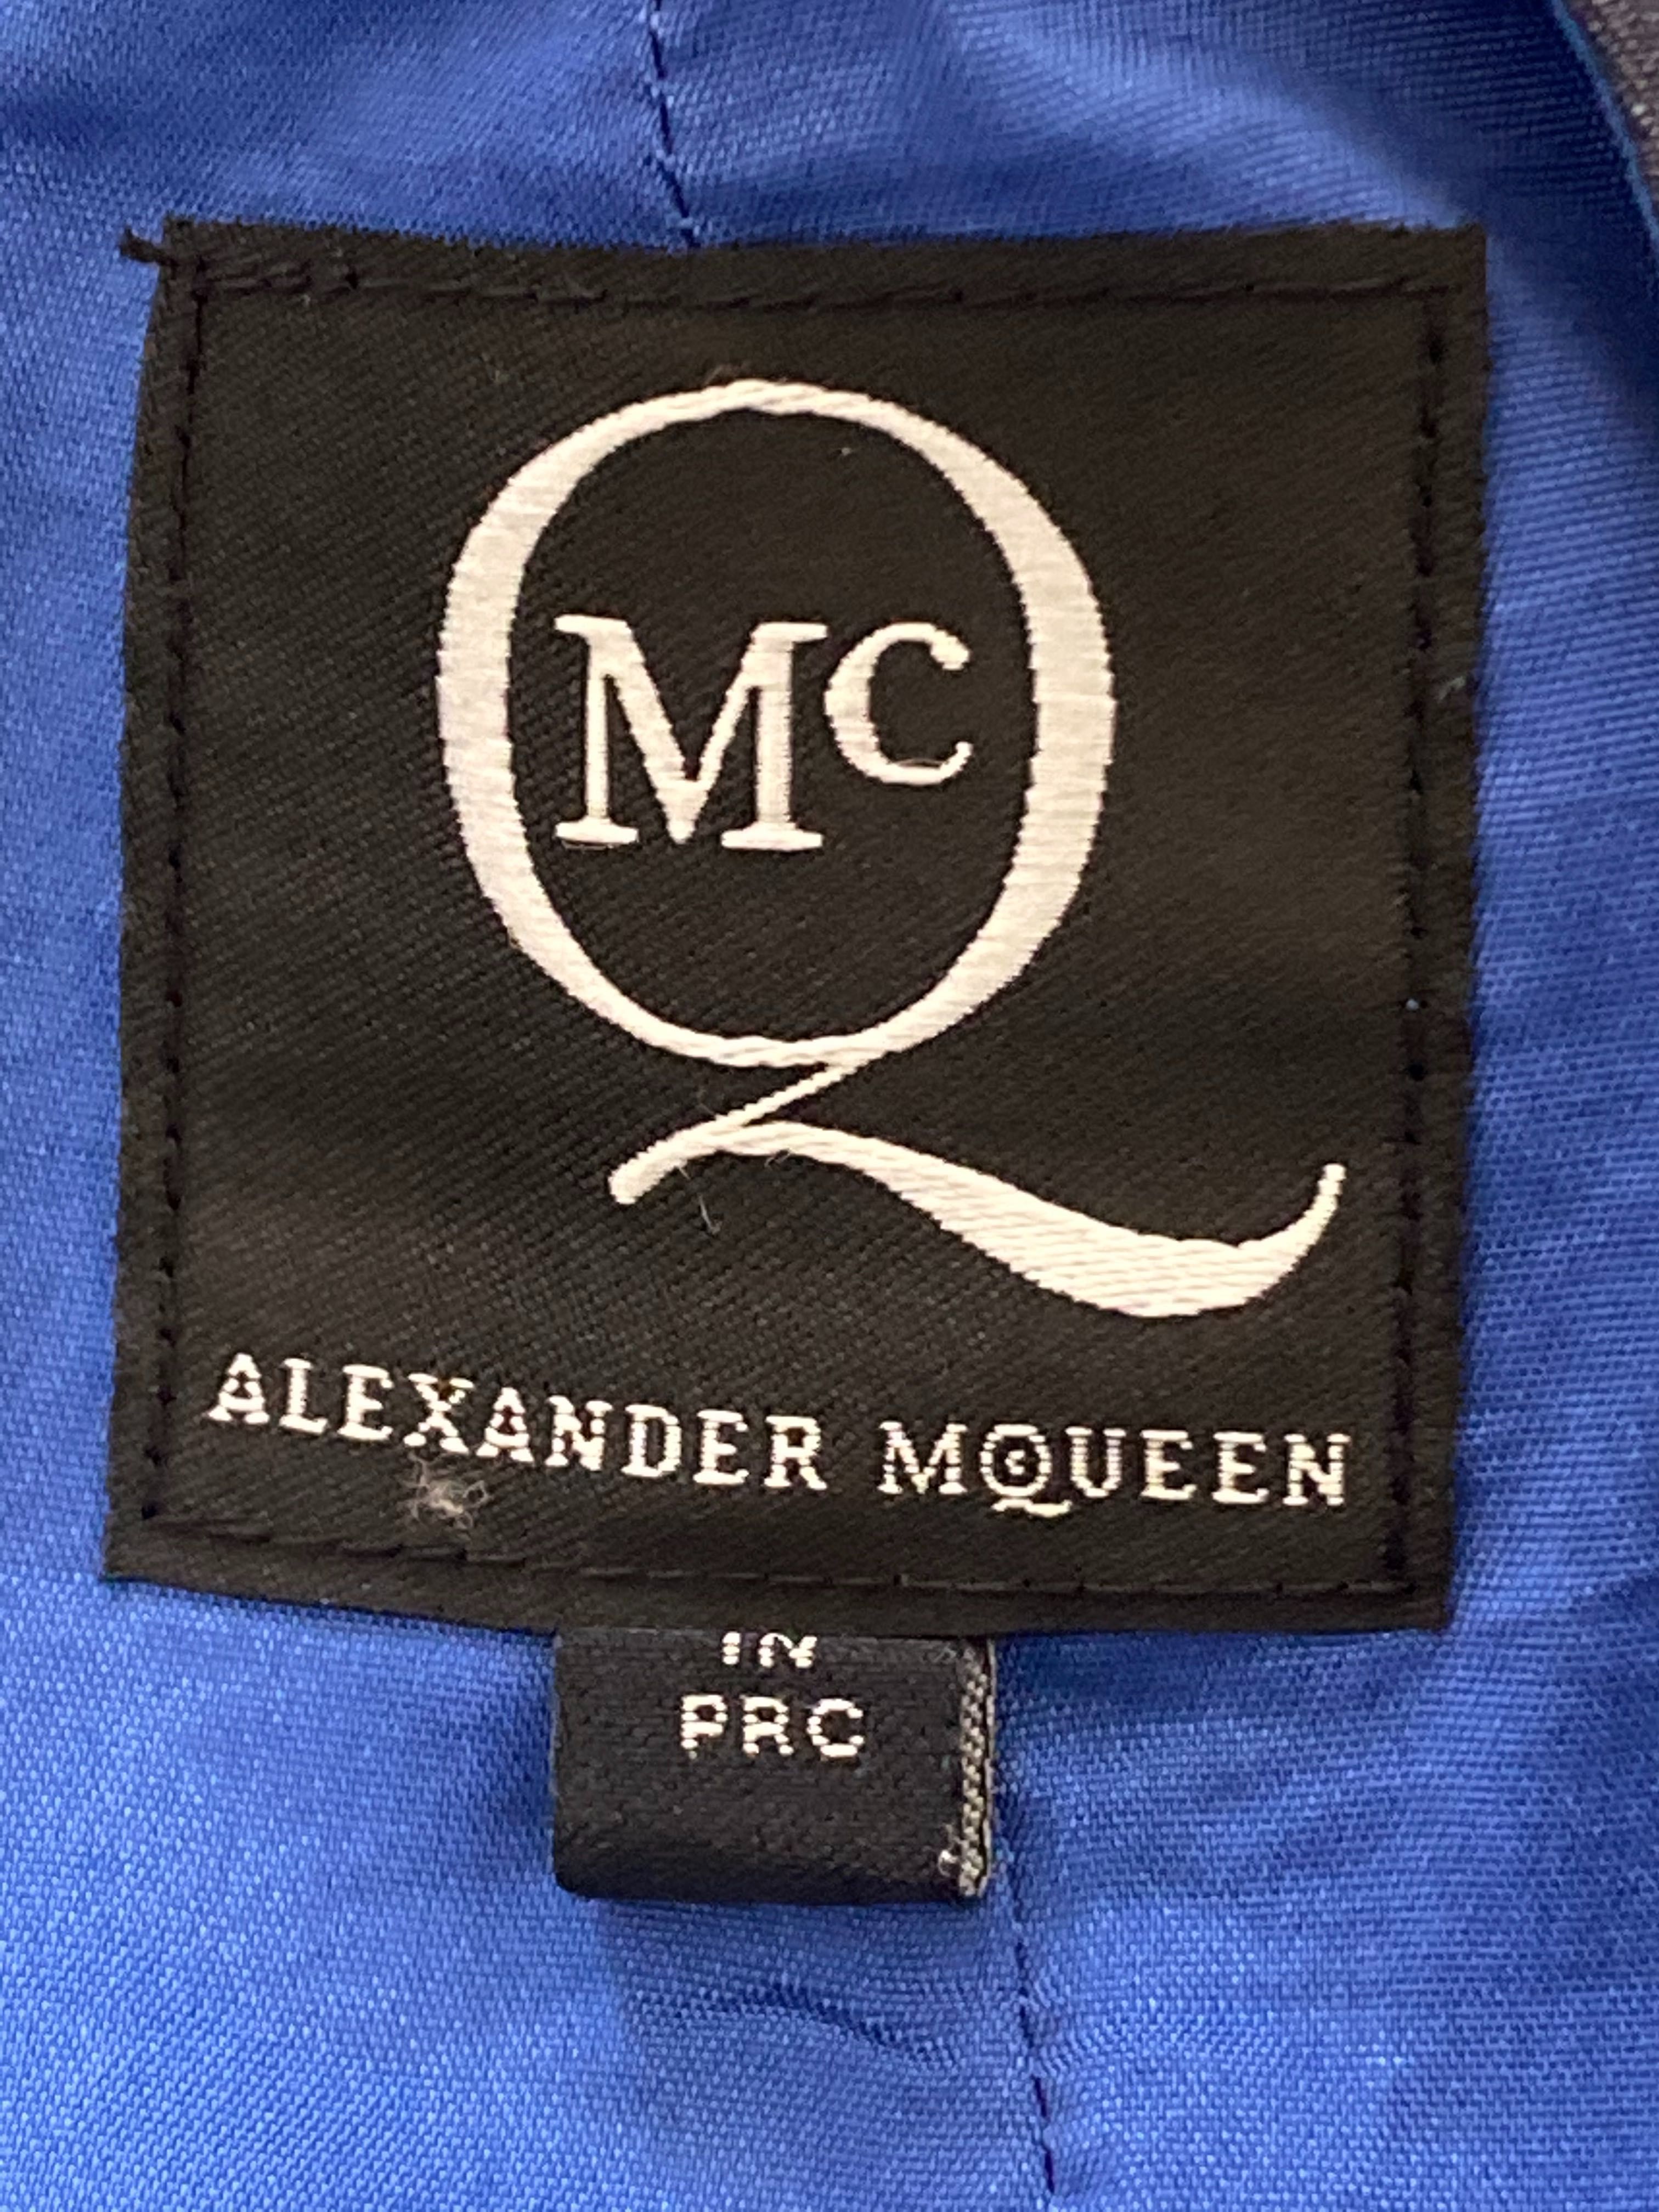 Alexander McQueen originala rochie frumoasa